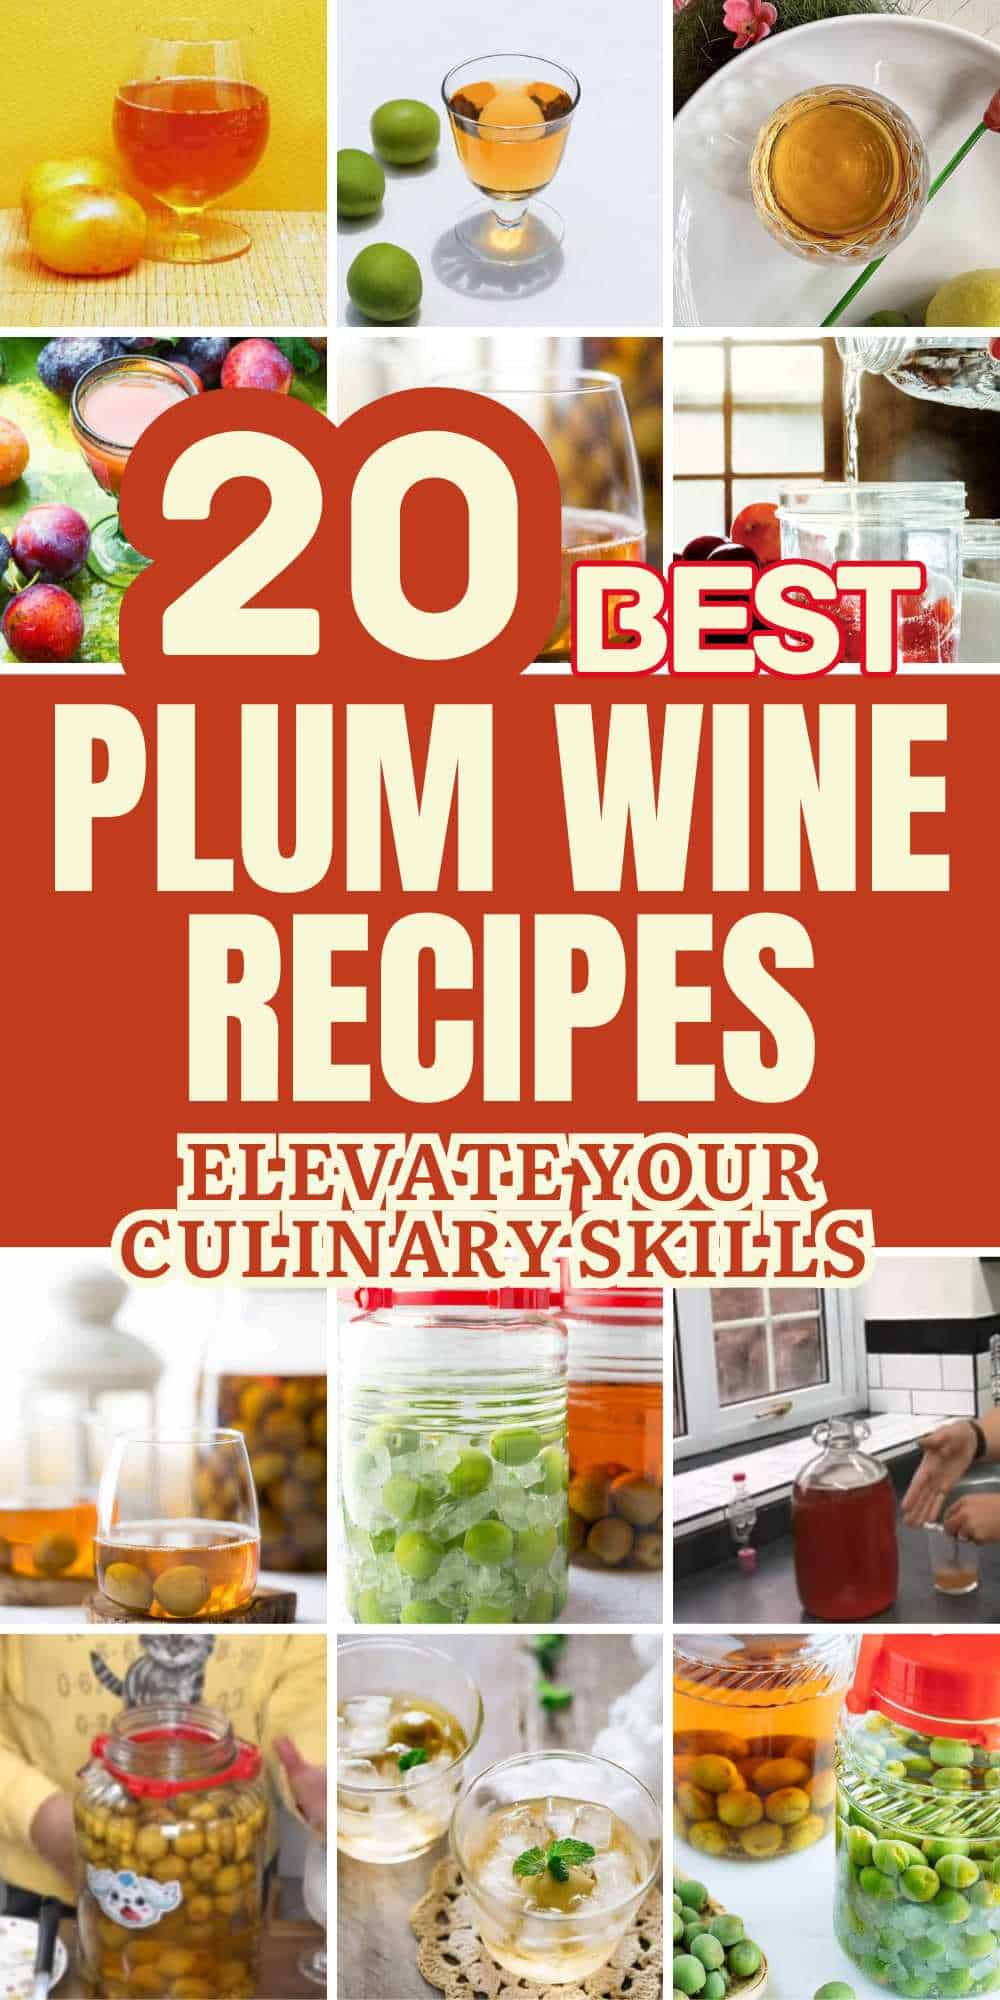 how-to-make-plum-wine